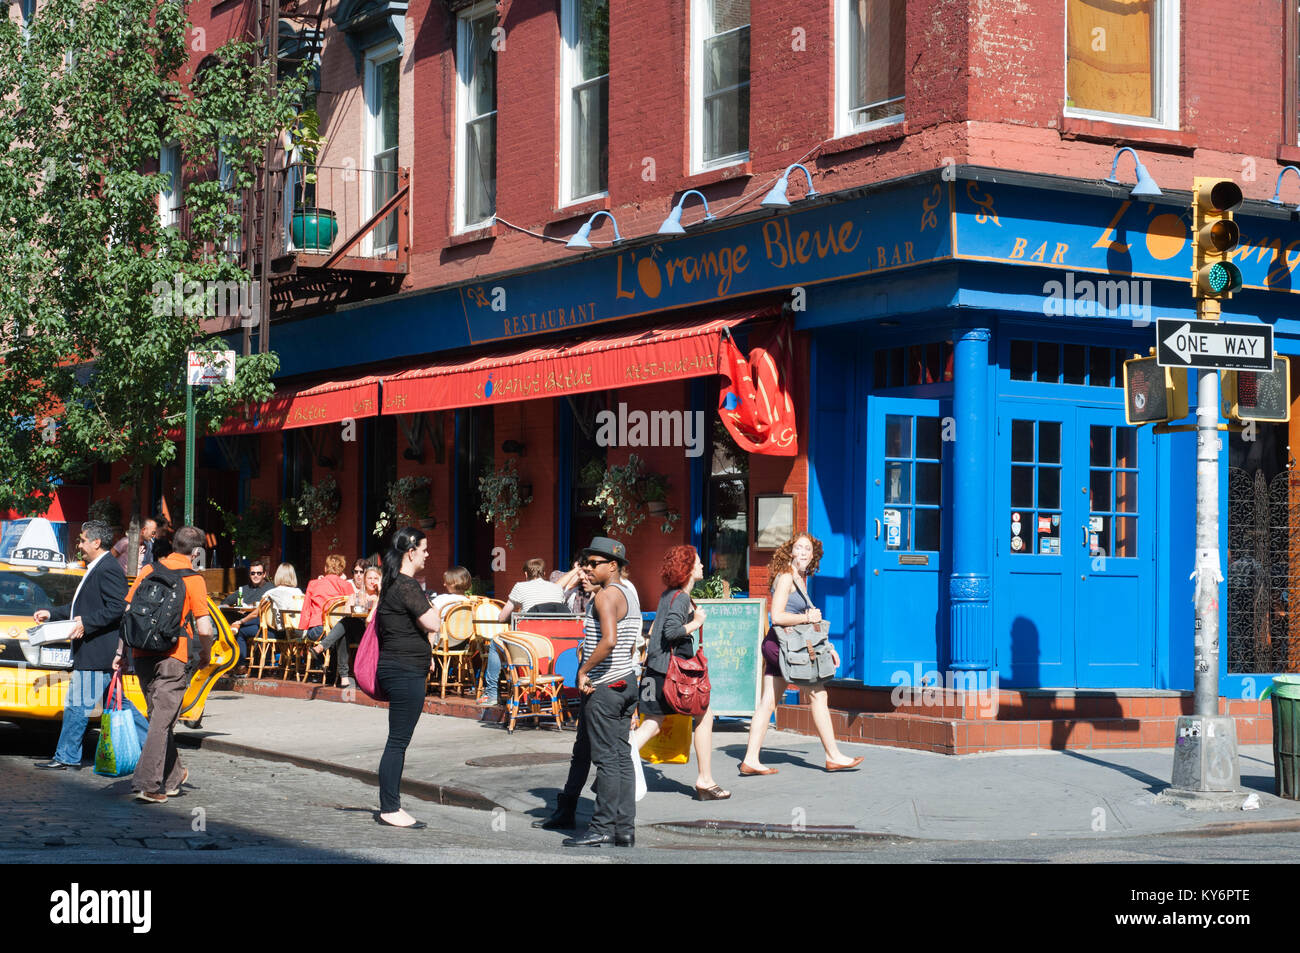 L'Orange Bleue restaurant and building on the corner of Broome Street and Crosby Street, Manhattan, New York City, USA Stock Photo